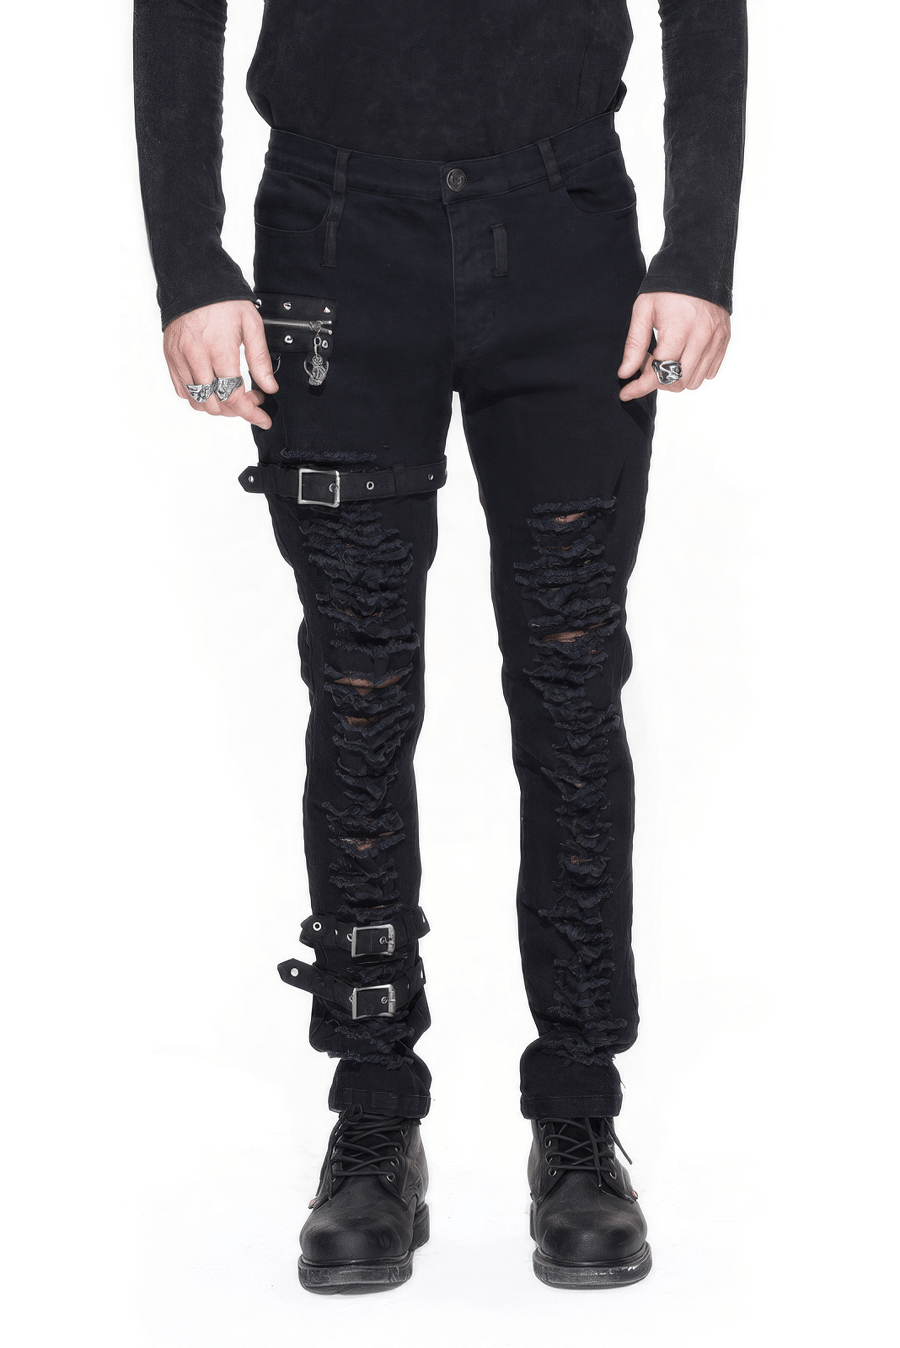 Steampunk Men Black Gothic Pants / Rock Style Slim Fit Trousers